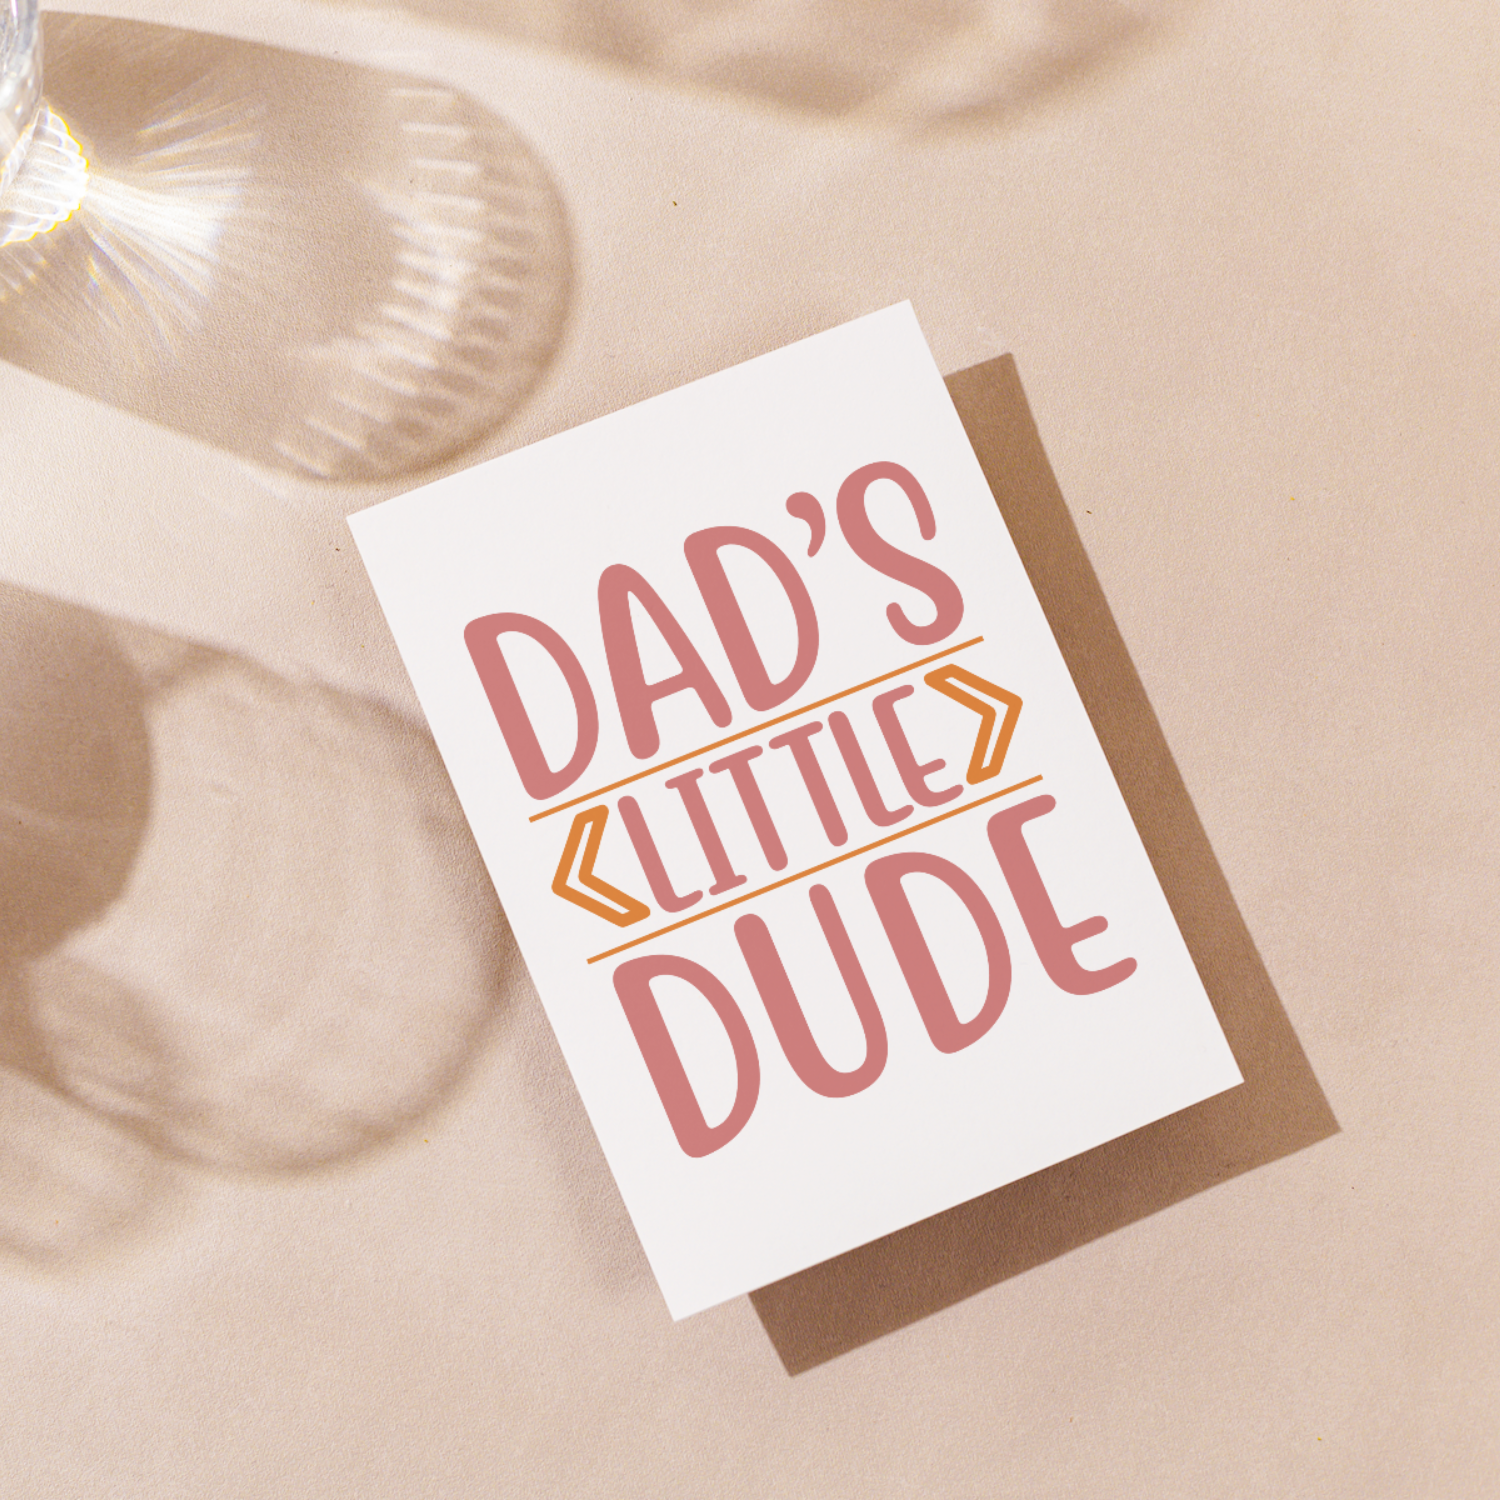 DAD’S LITTLE DUDE SVG | Digital Download | Cut File | SVG - Only The Sweet Stuff